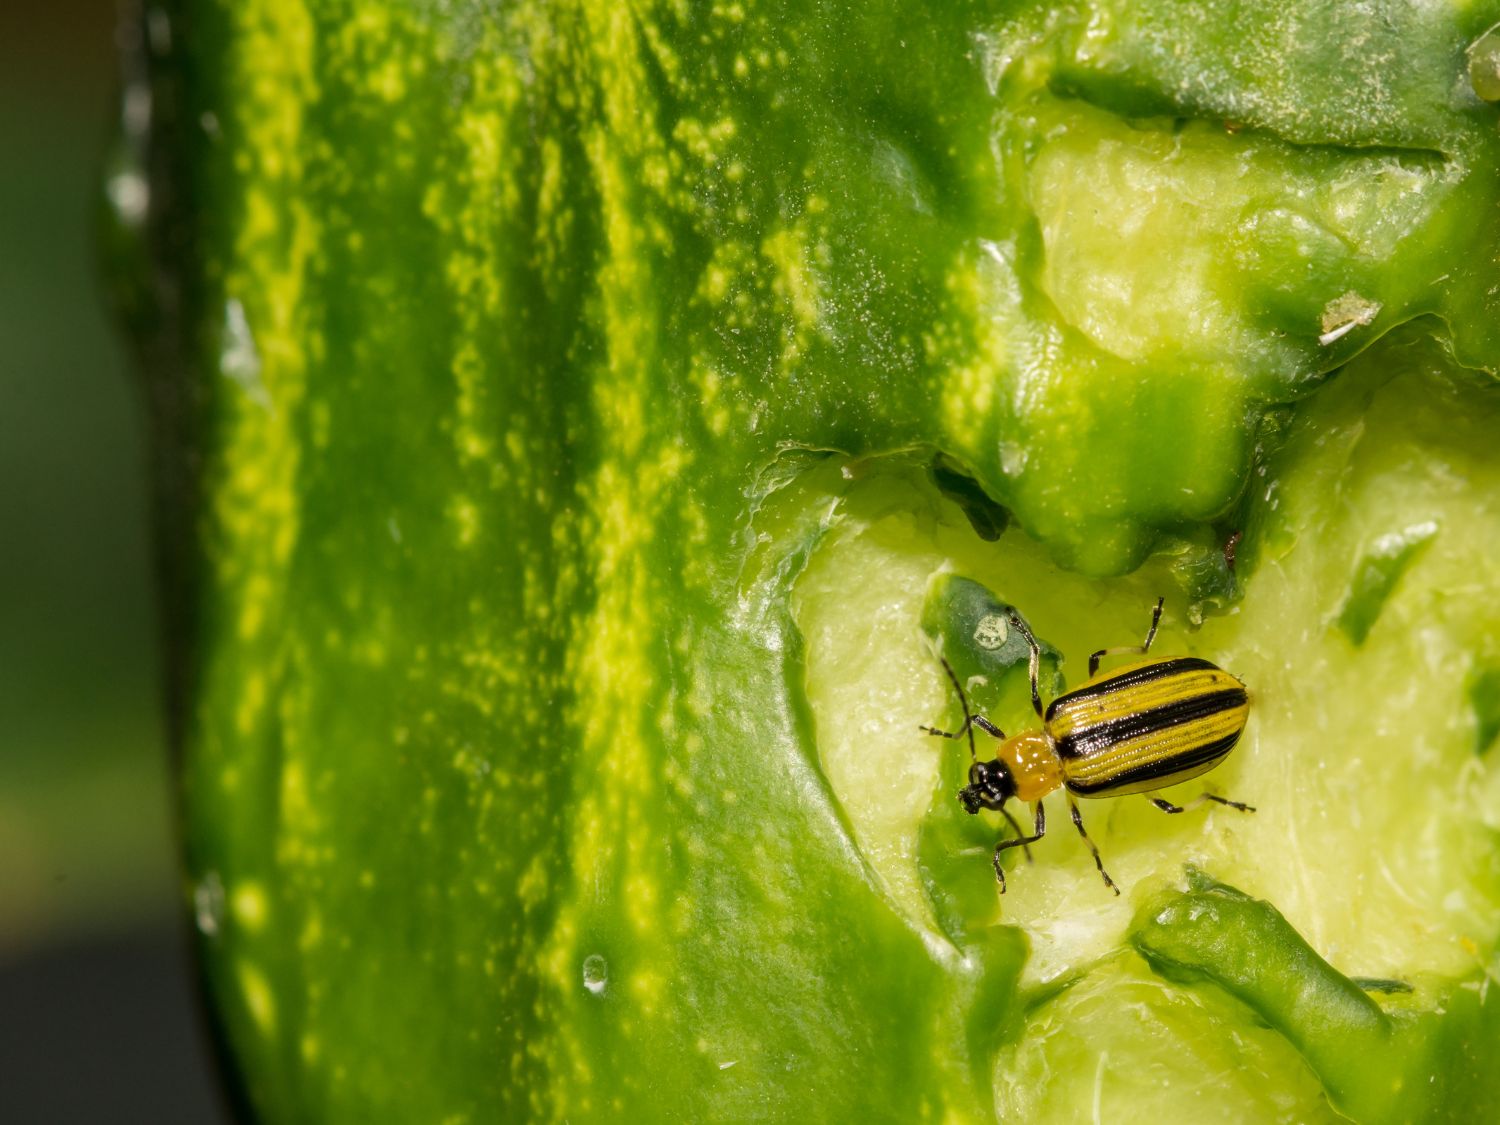 Cucumber beetle eating a cucumber